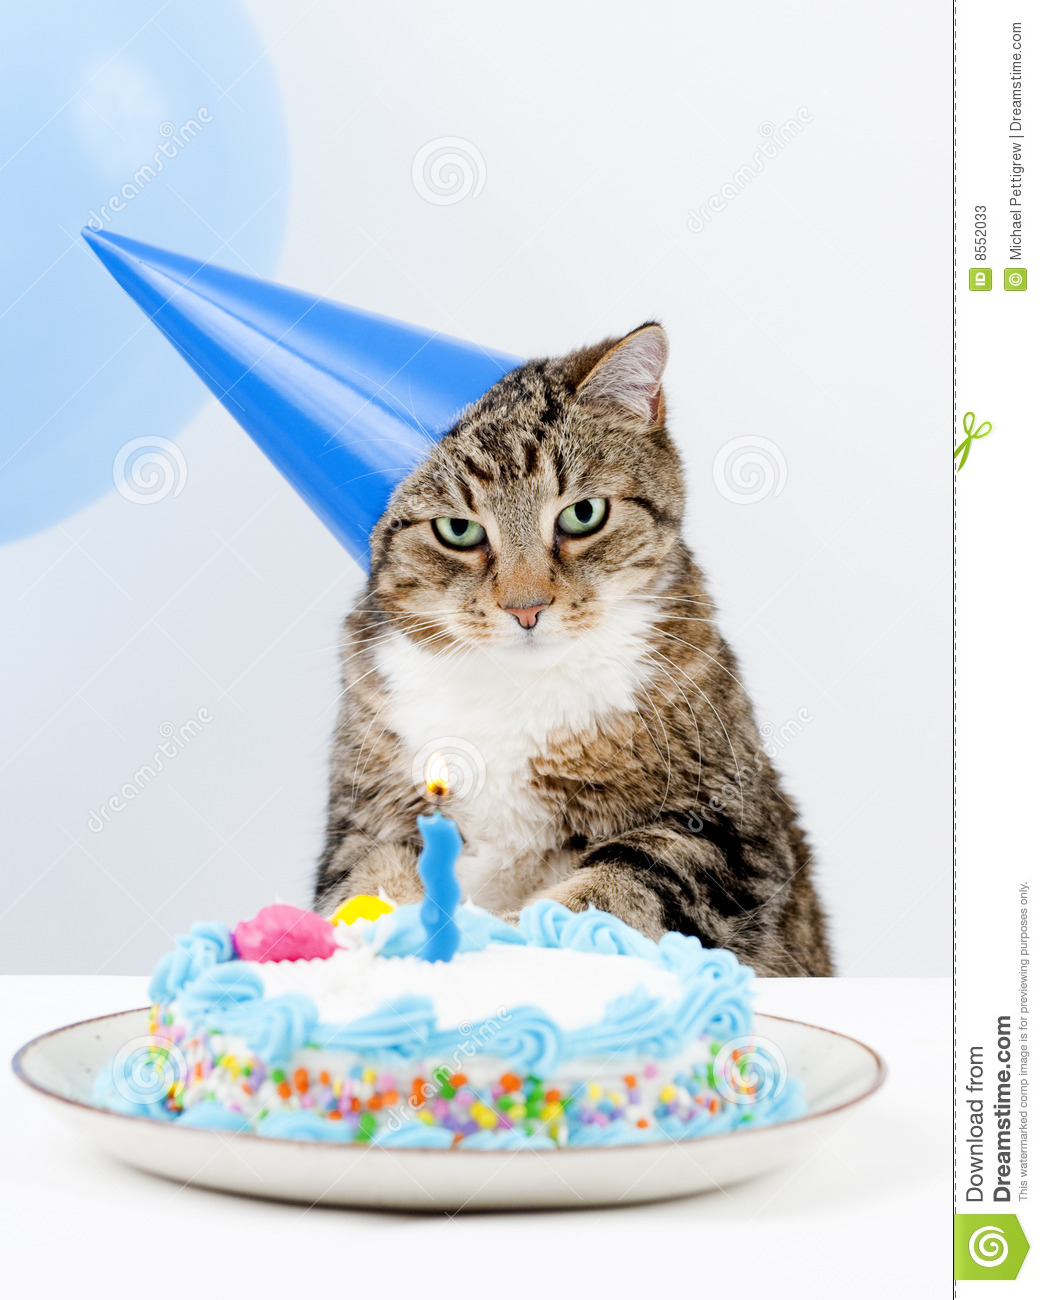 Cat Birthday Party Stock Photos   Image  8552033